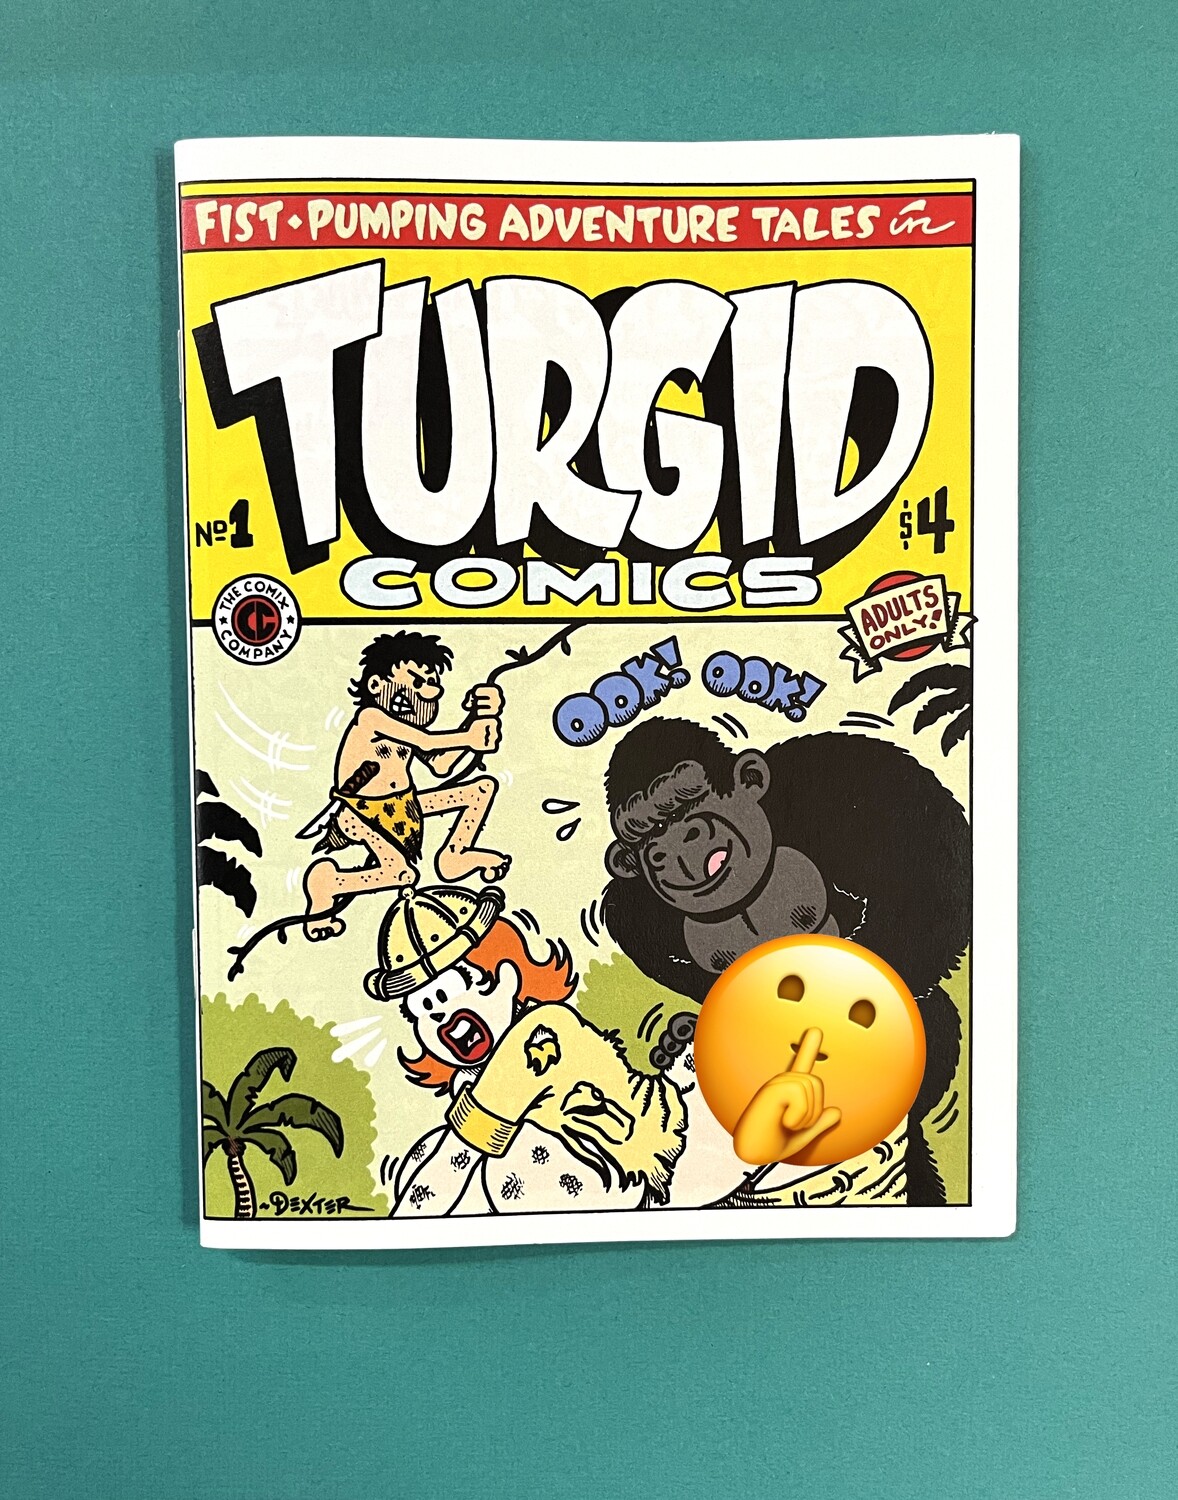 TURGID COMIX #1, comic by Dexter Cockburn